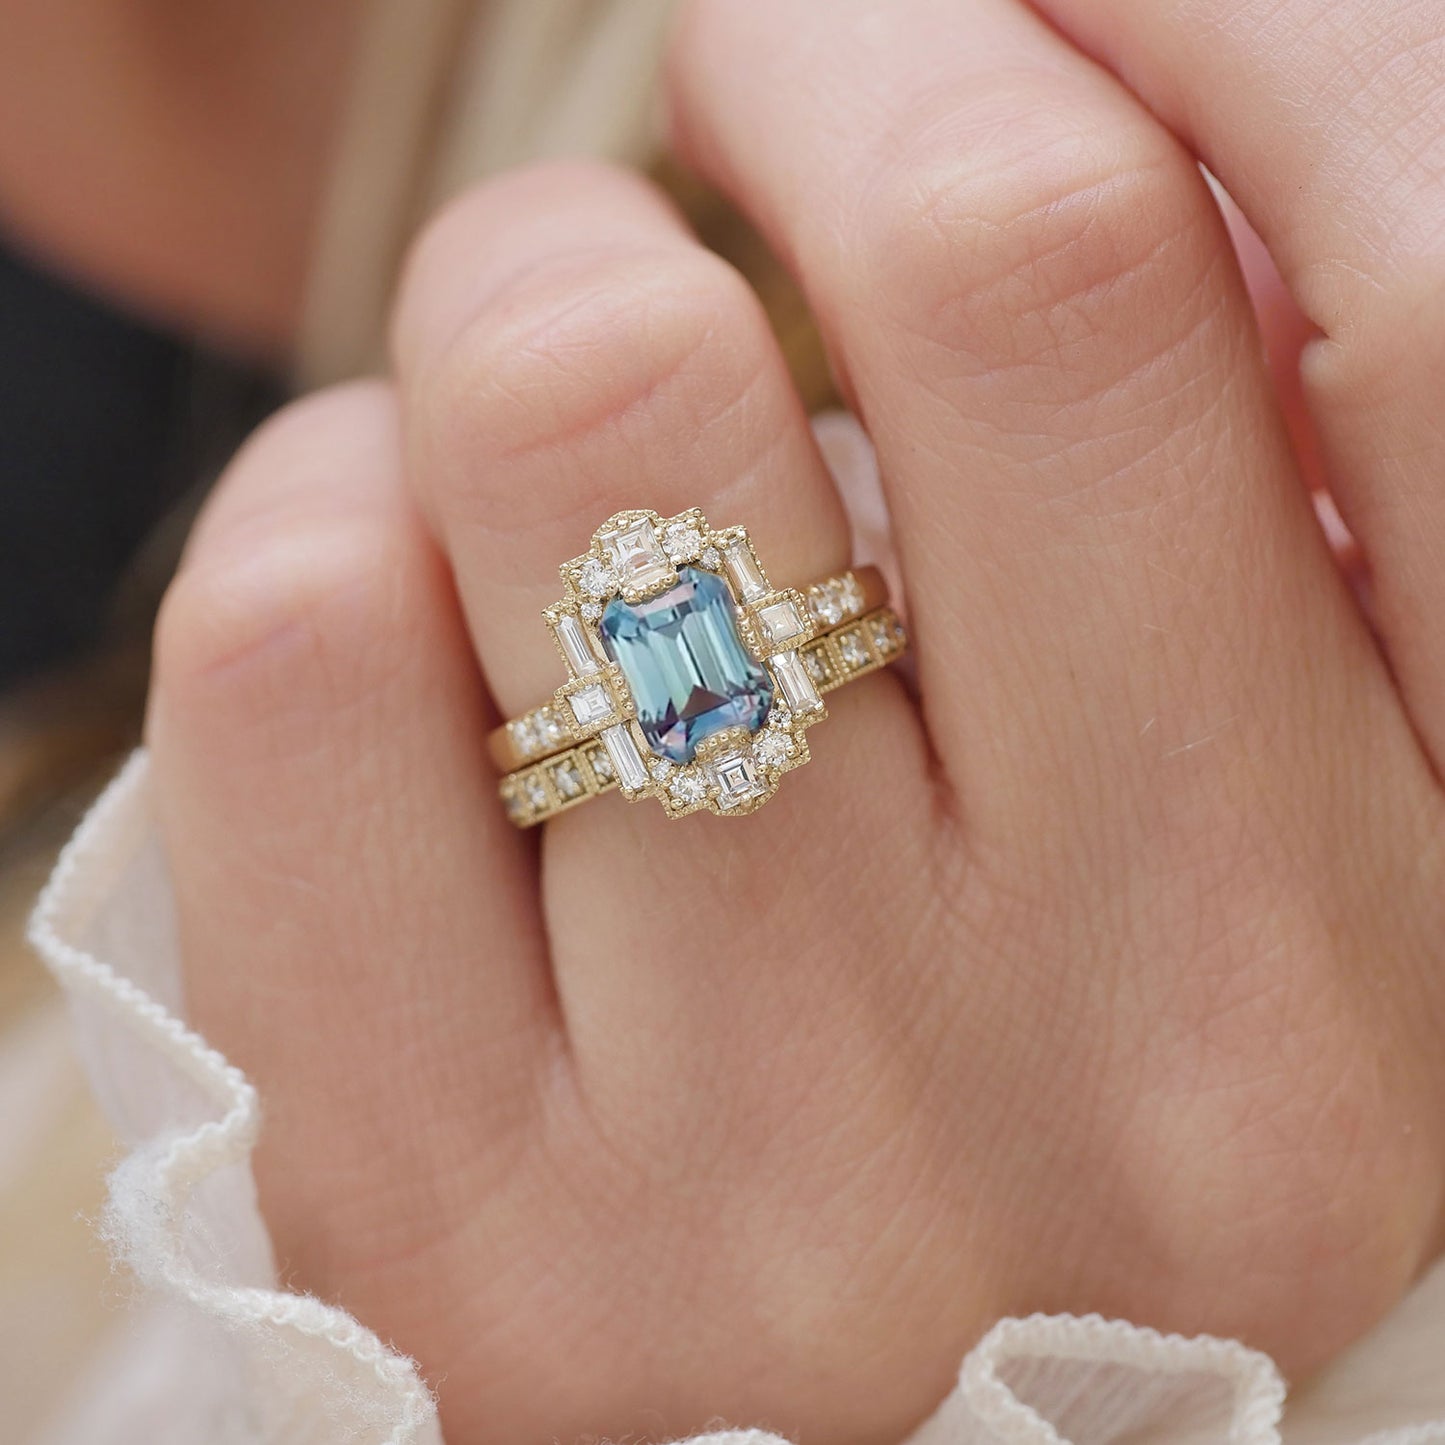 Teal Emerald Cut Sapphire Deco Halo Diamond Ring